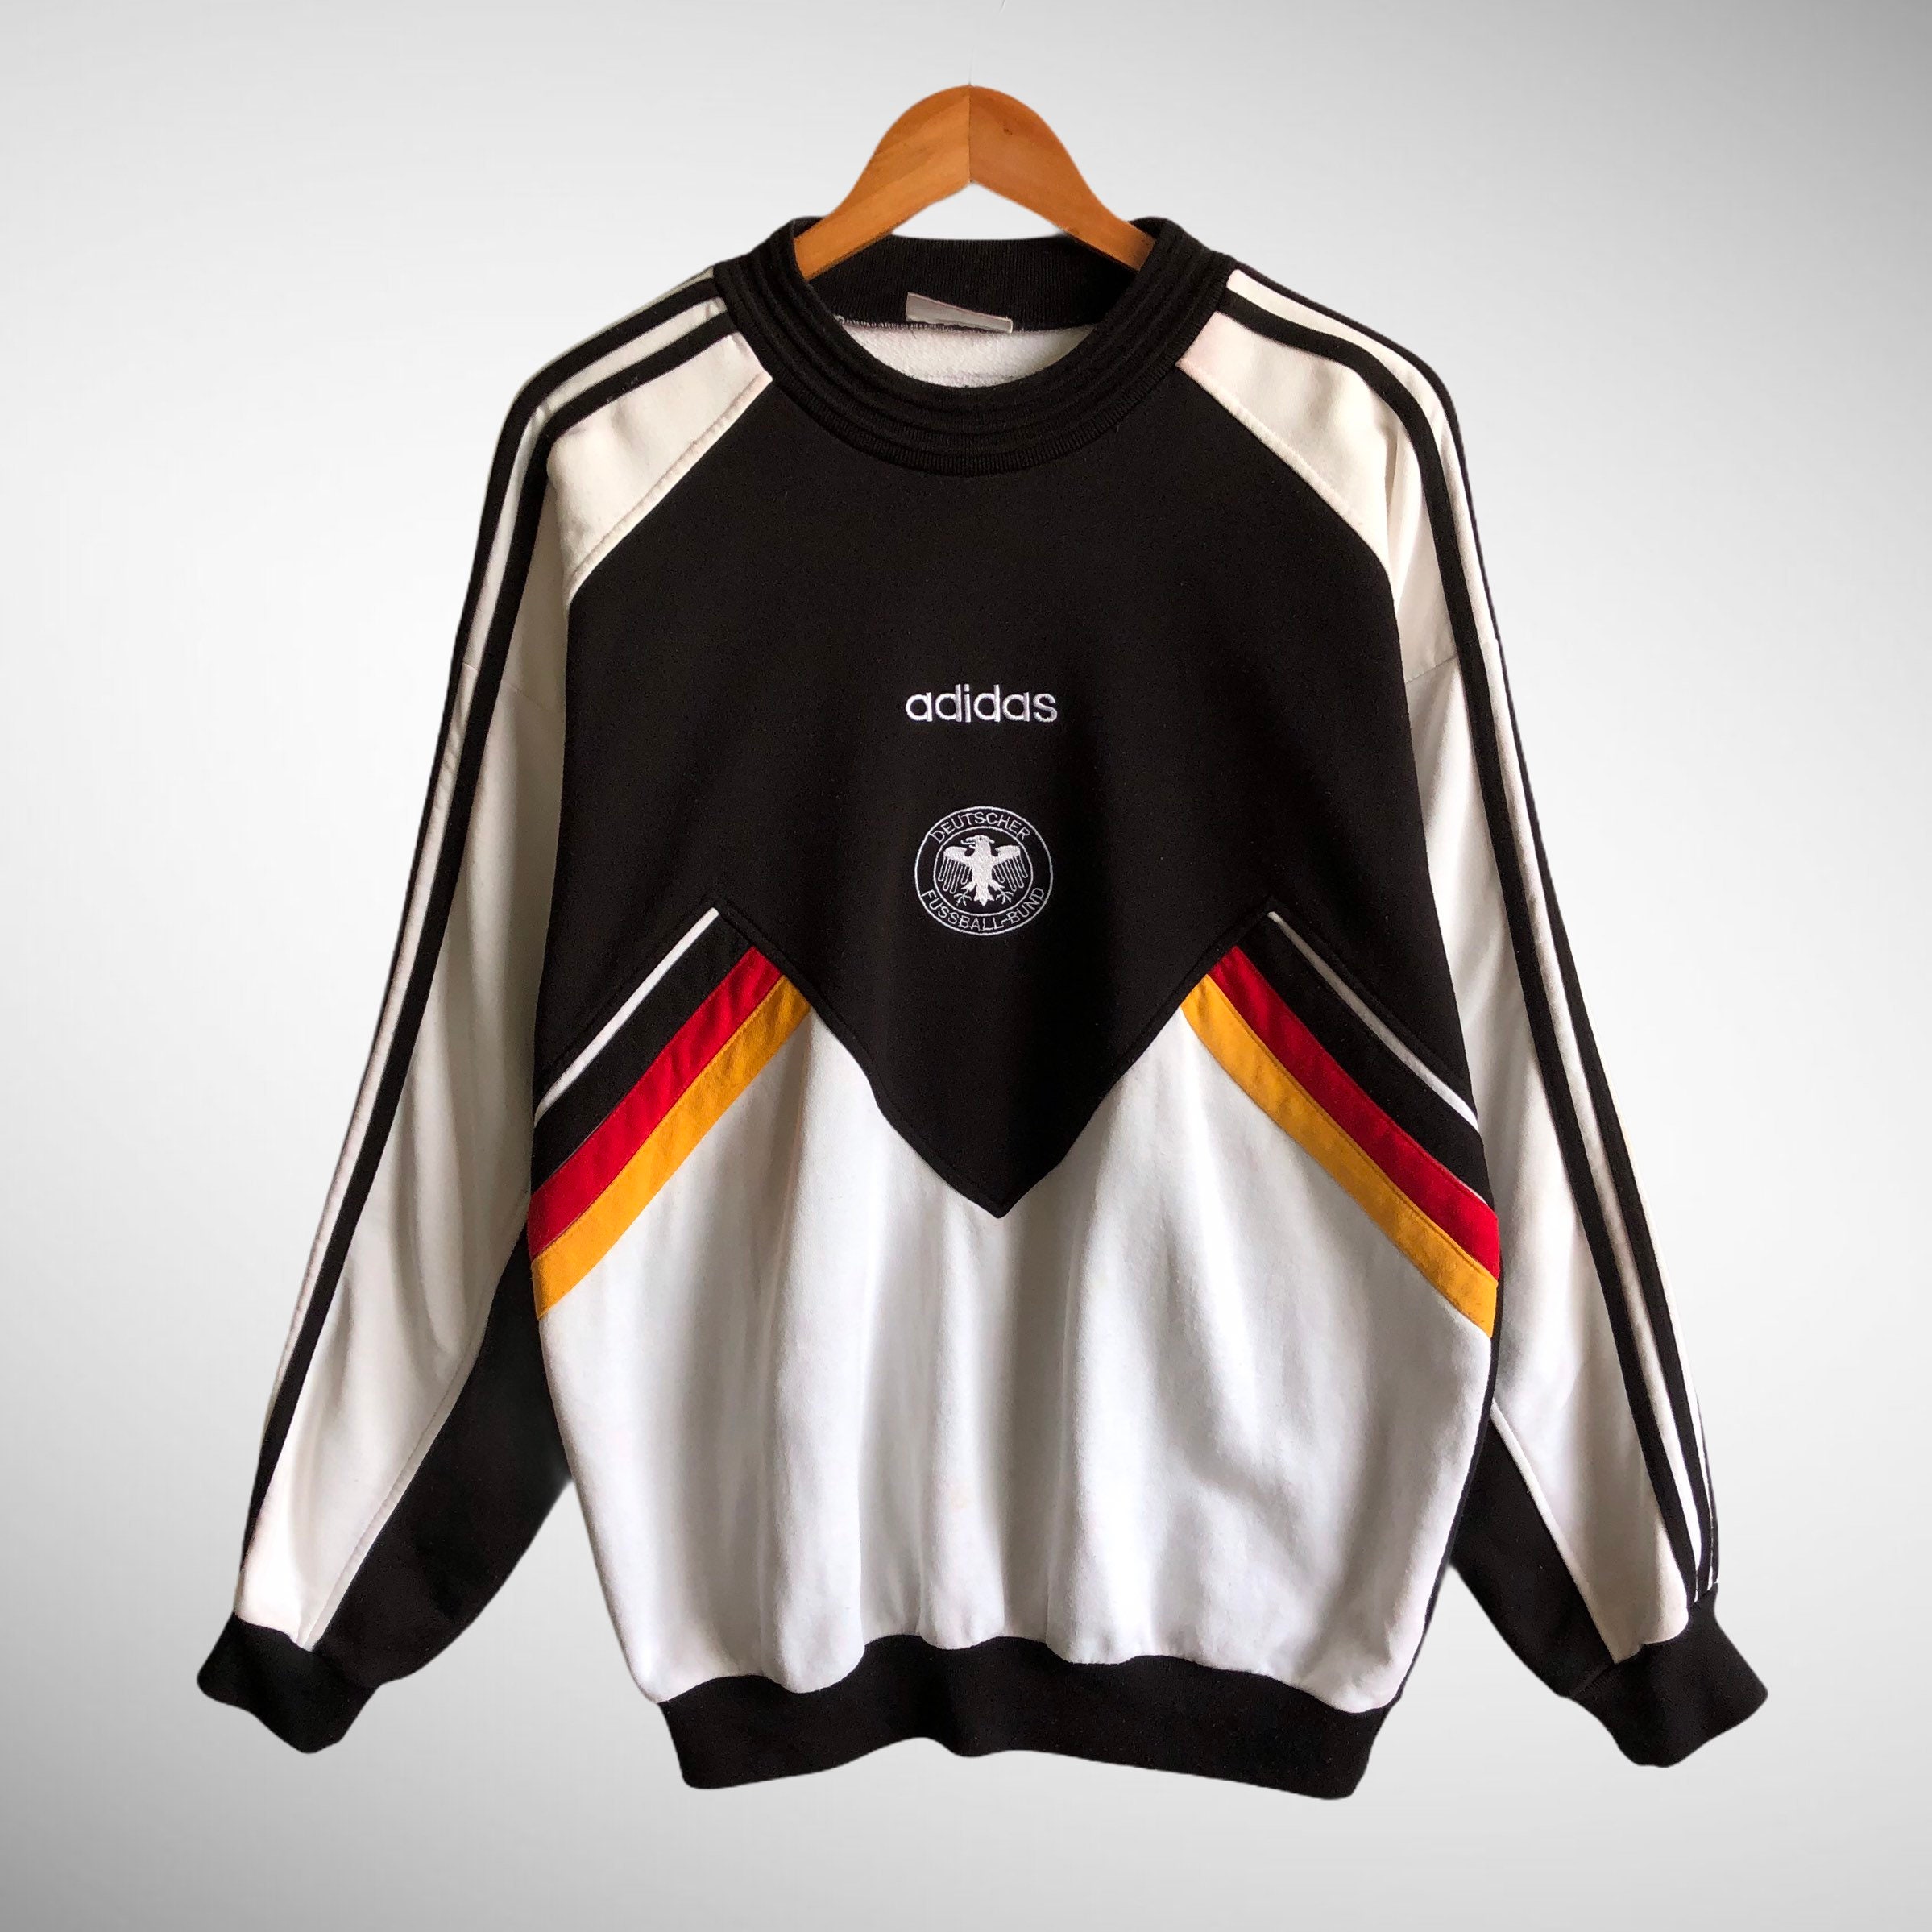 Preguntar flor Perdóneme Vintage Adidas Germany Football Sweatshirt Adidas Germany - Etsy